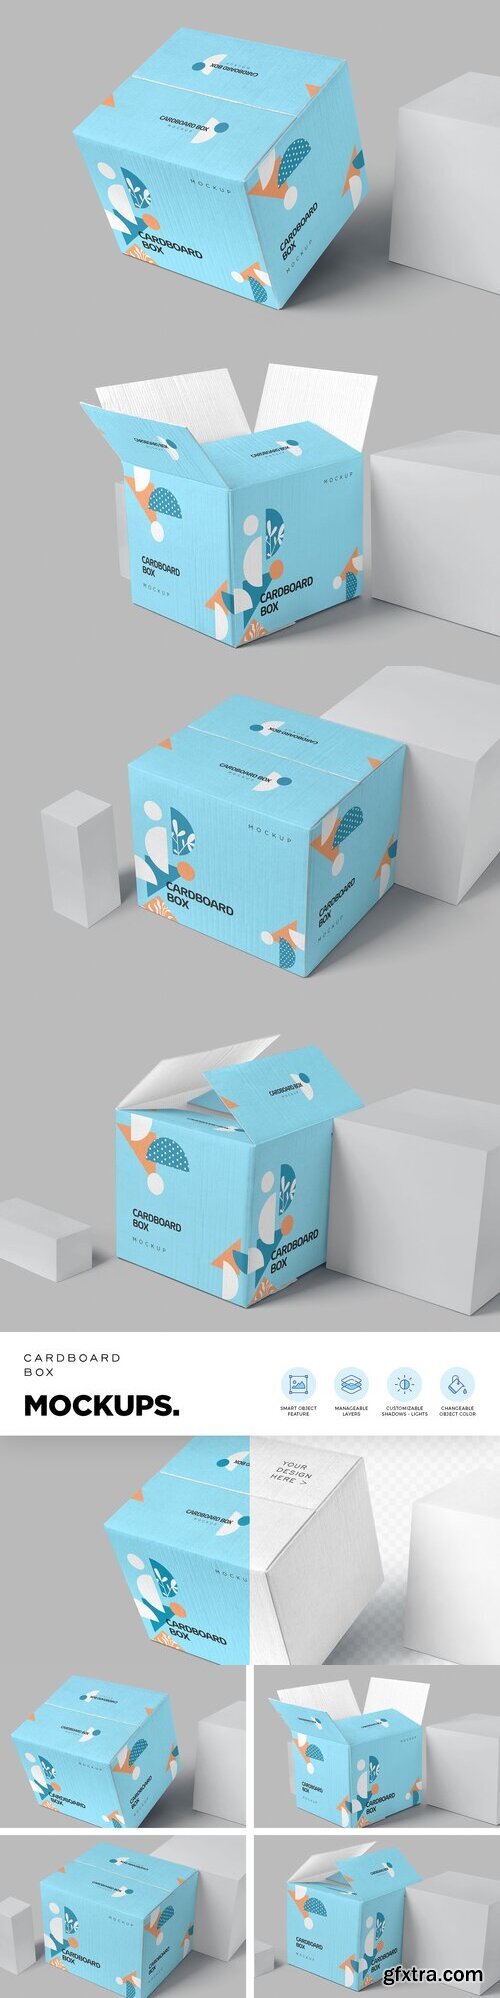 CreativeMarket - 4 Cardboard Box Mockups 6704196